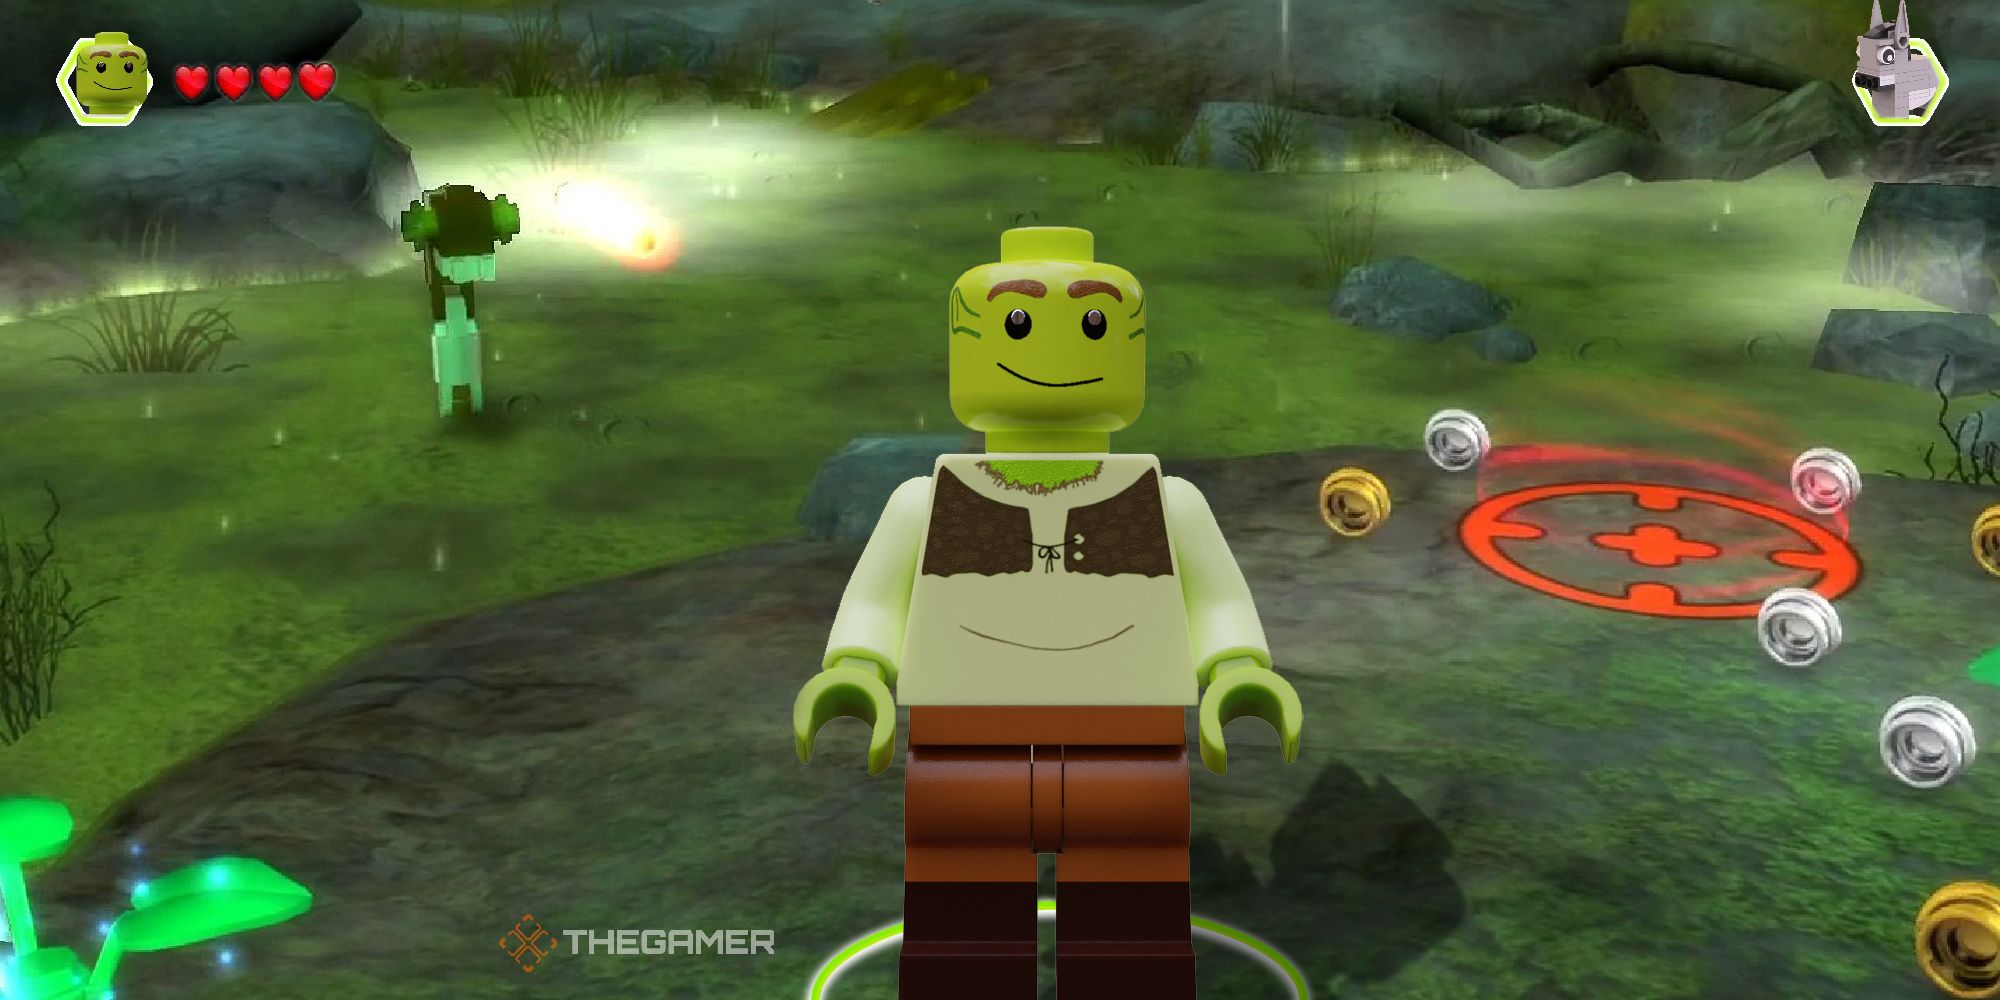 Lego Shrek